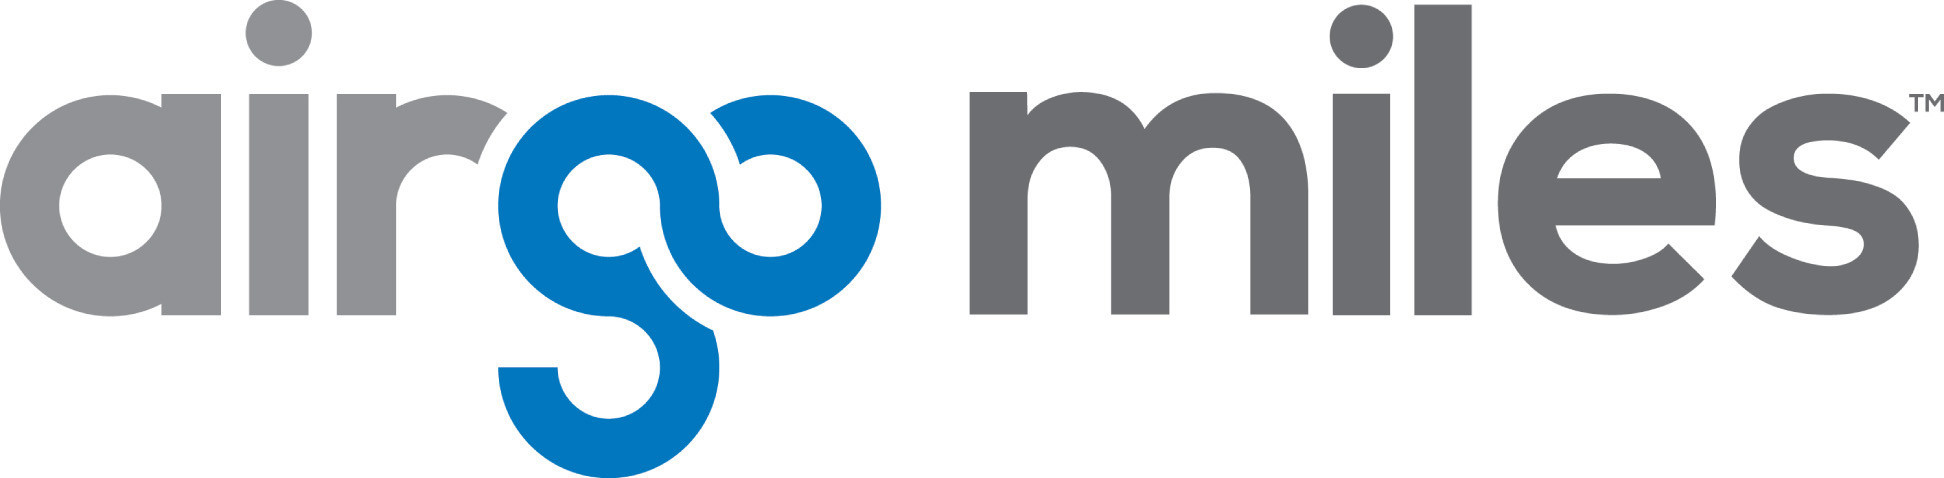 Microsol Logo PNG Transparent & SVG Vector - Freebie Supply